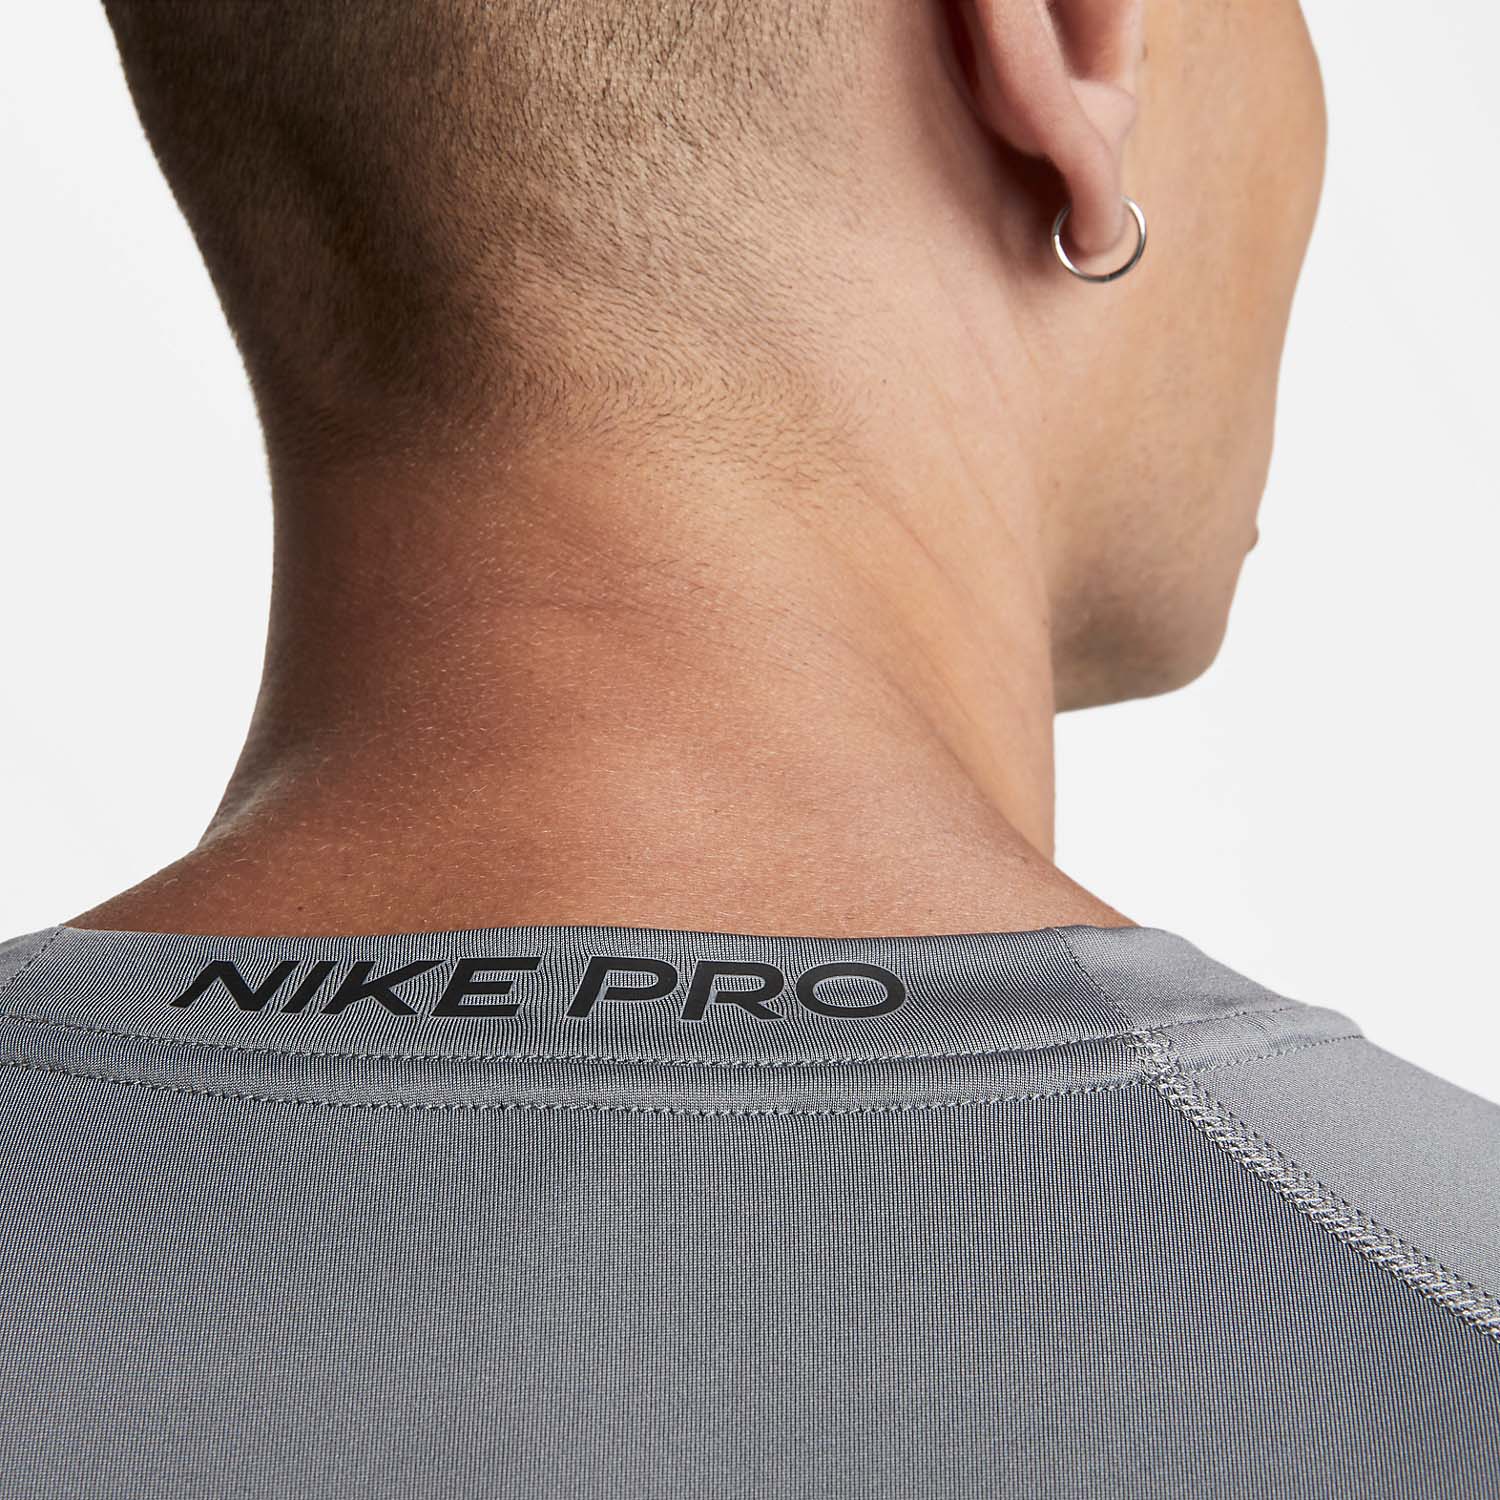 Nike Pro T-Shirt - Smoke Grey/Black